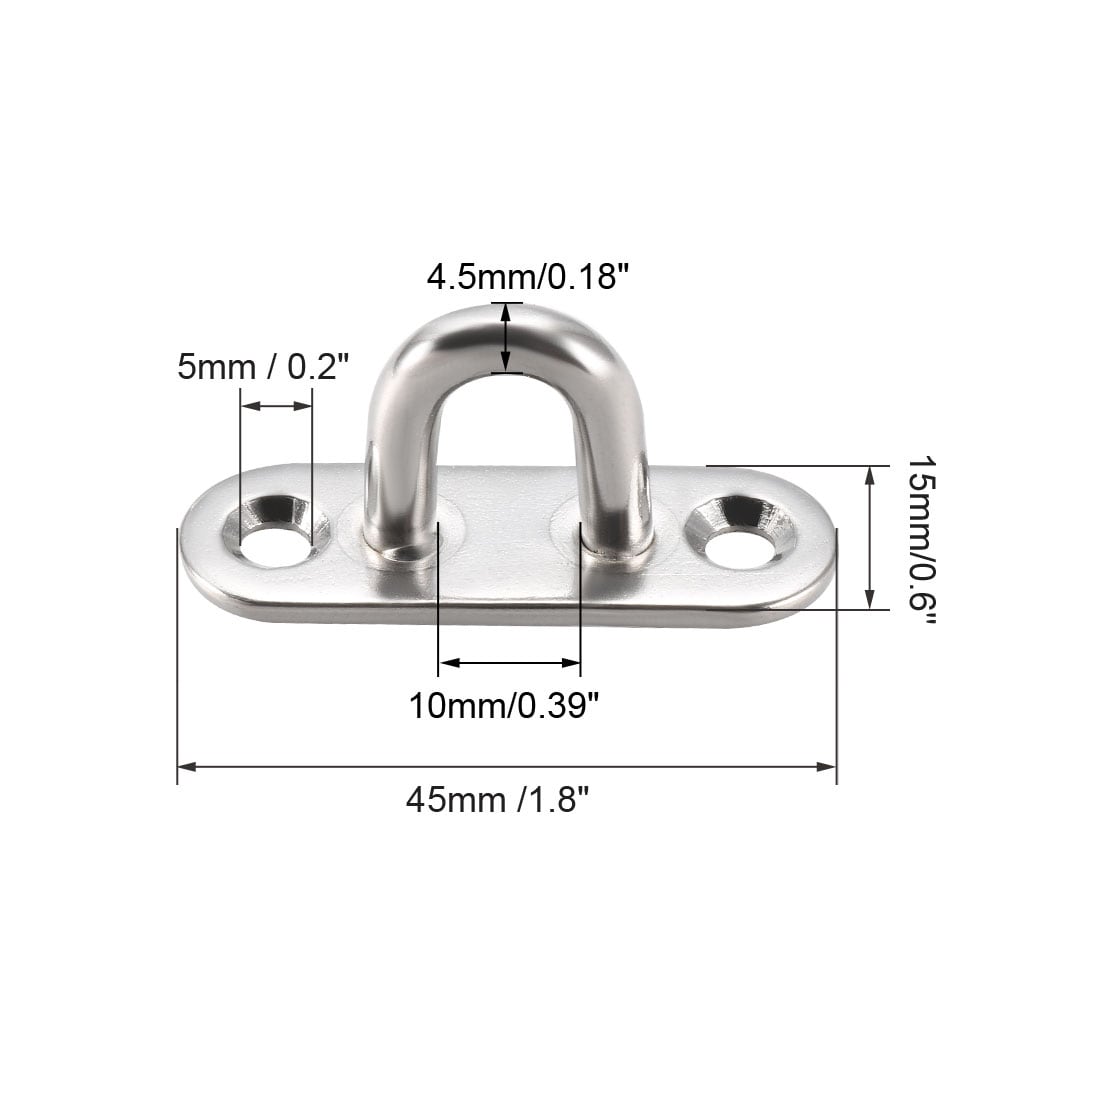 1.6Stainless Steel Cabinet Latch Lock Catch Eye Cabin Hook Plate,2pcs - Silver - Length: 1.6